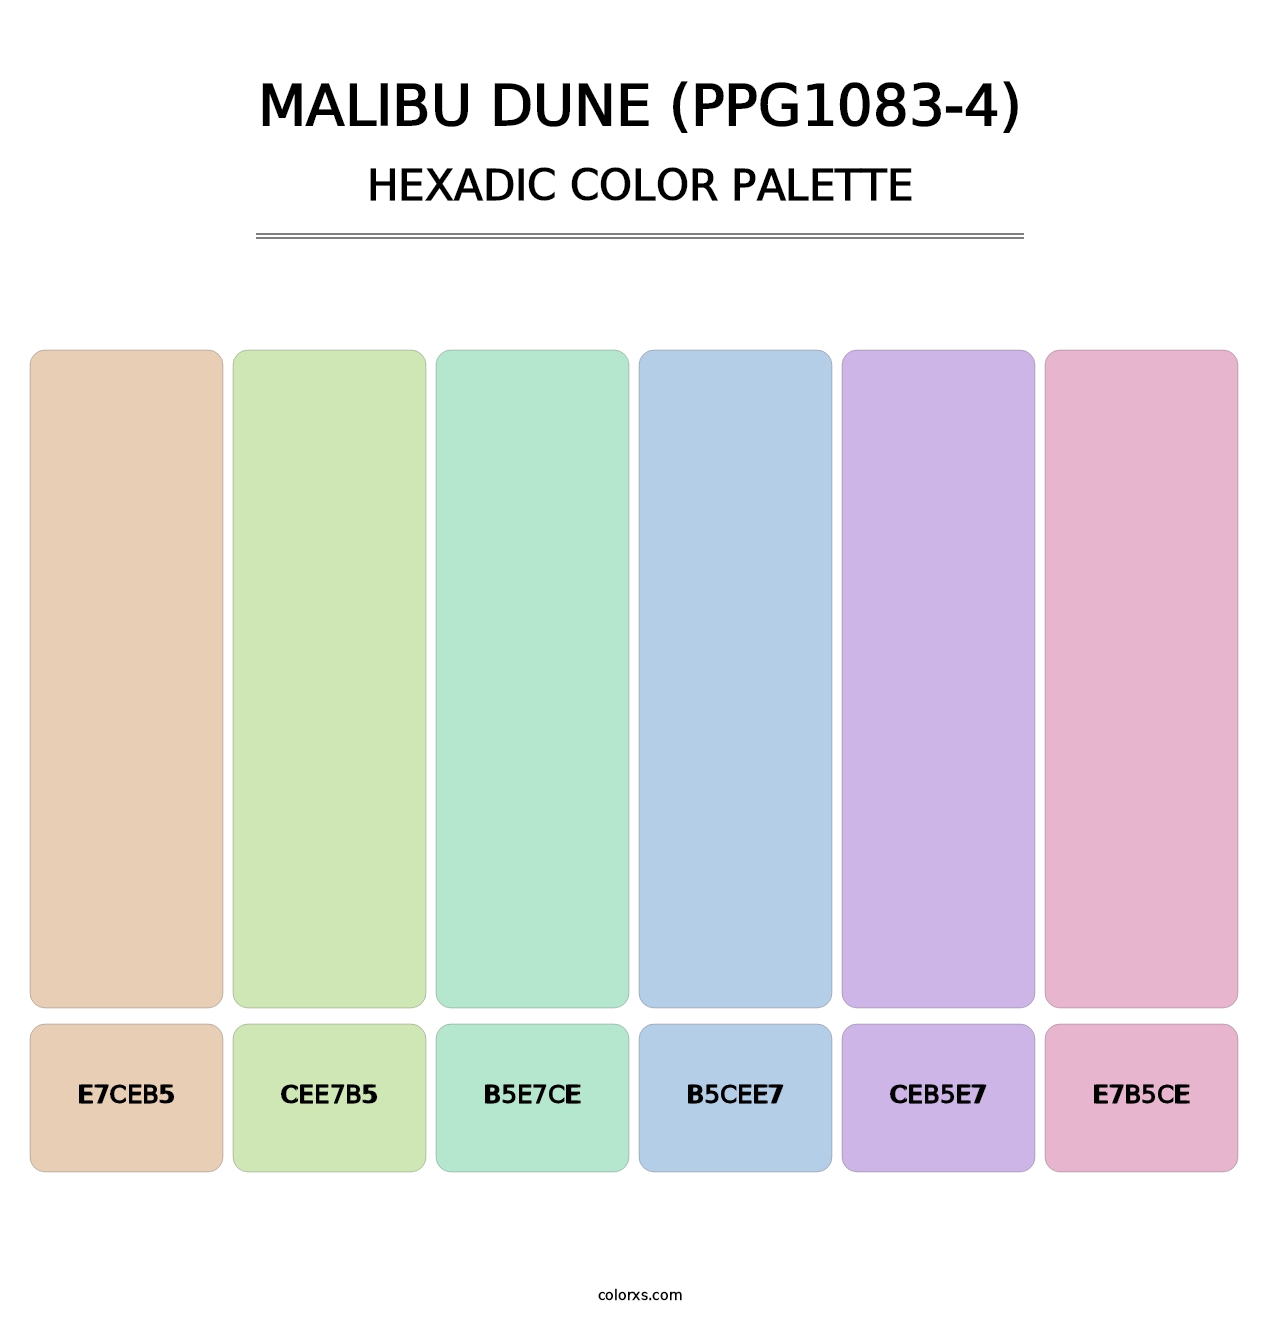 Malibu Dune (PPG1083-4) - Hexadic Color Palette